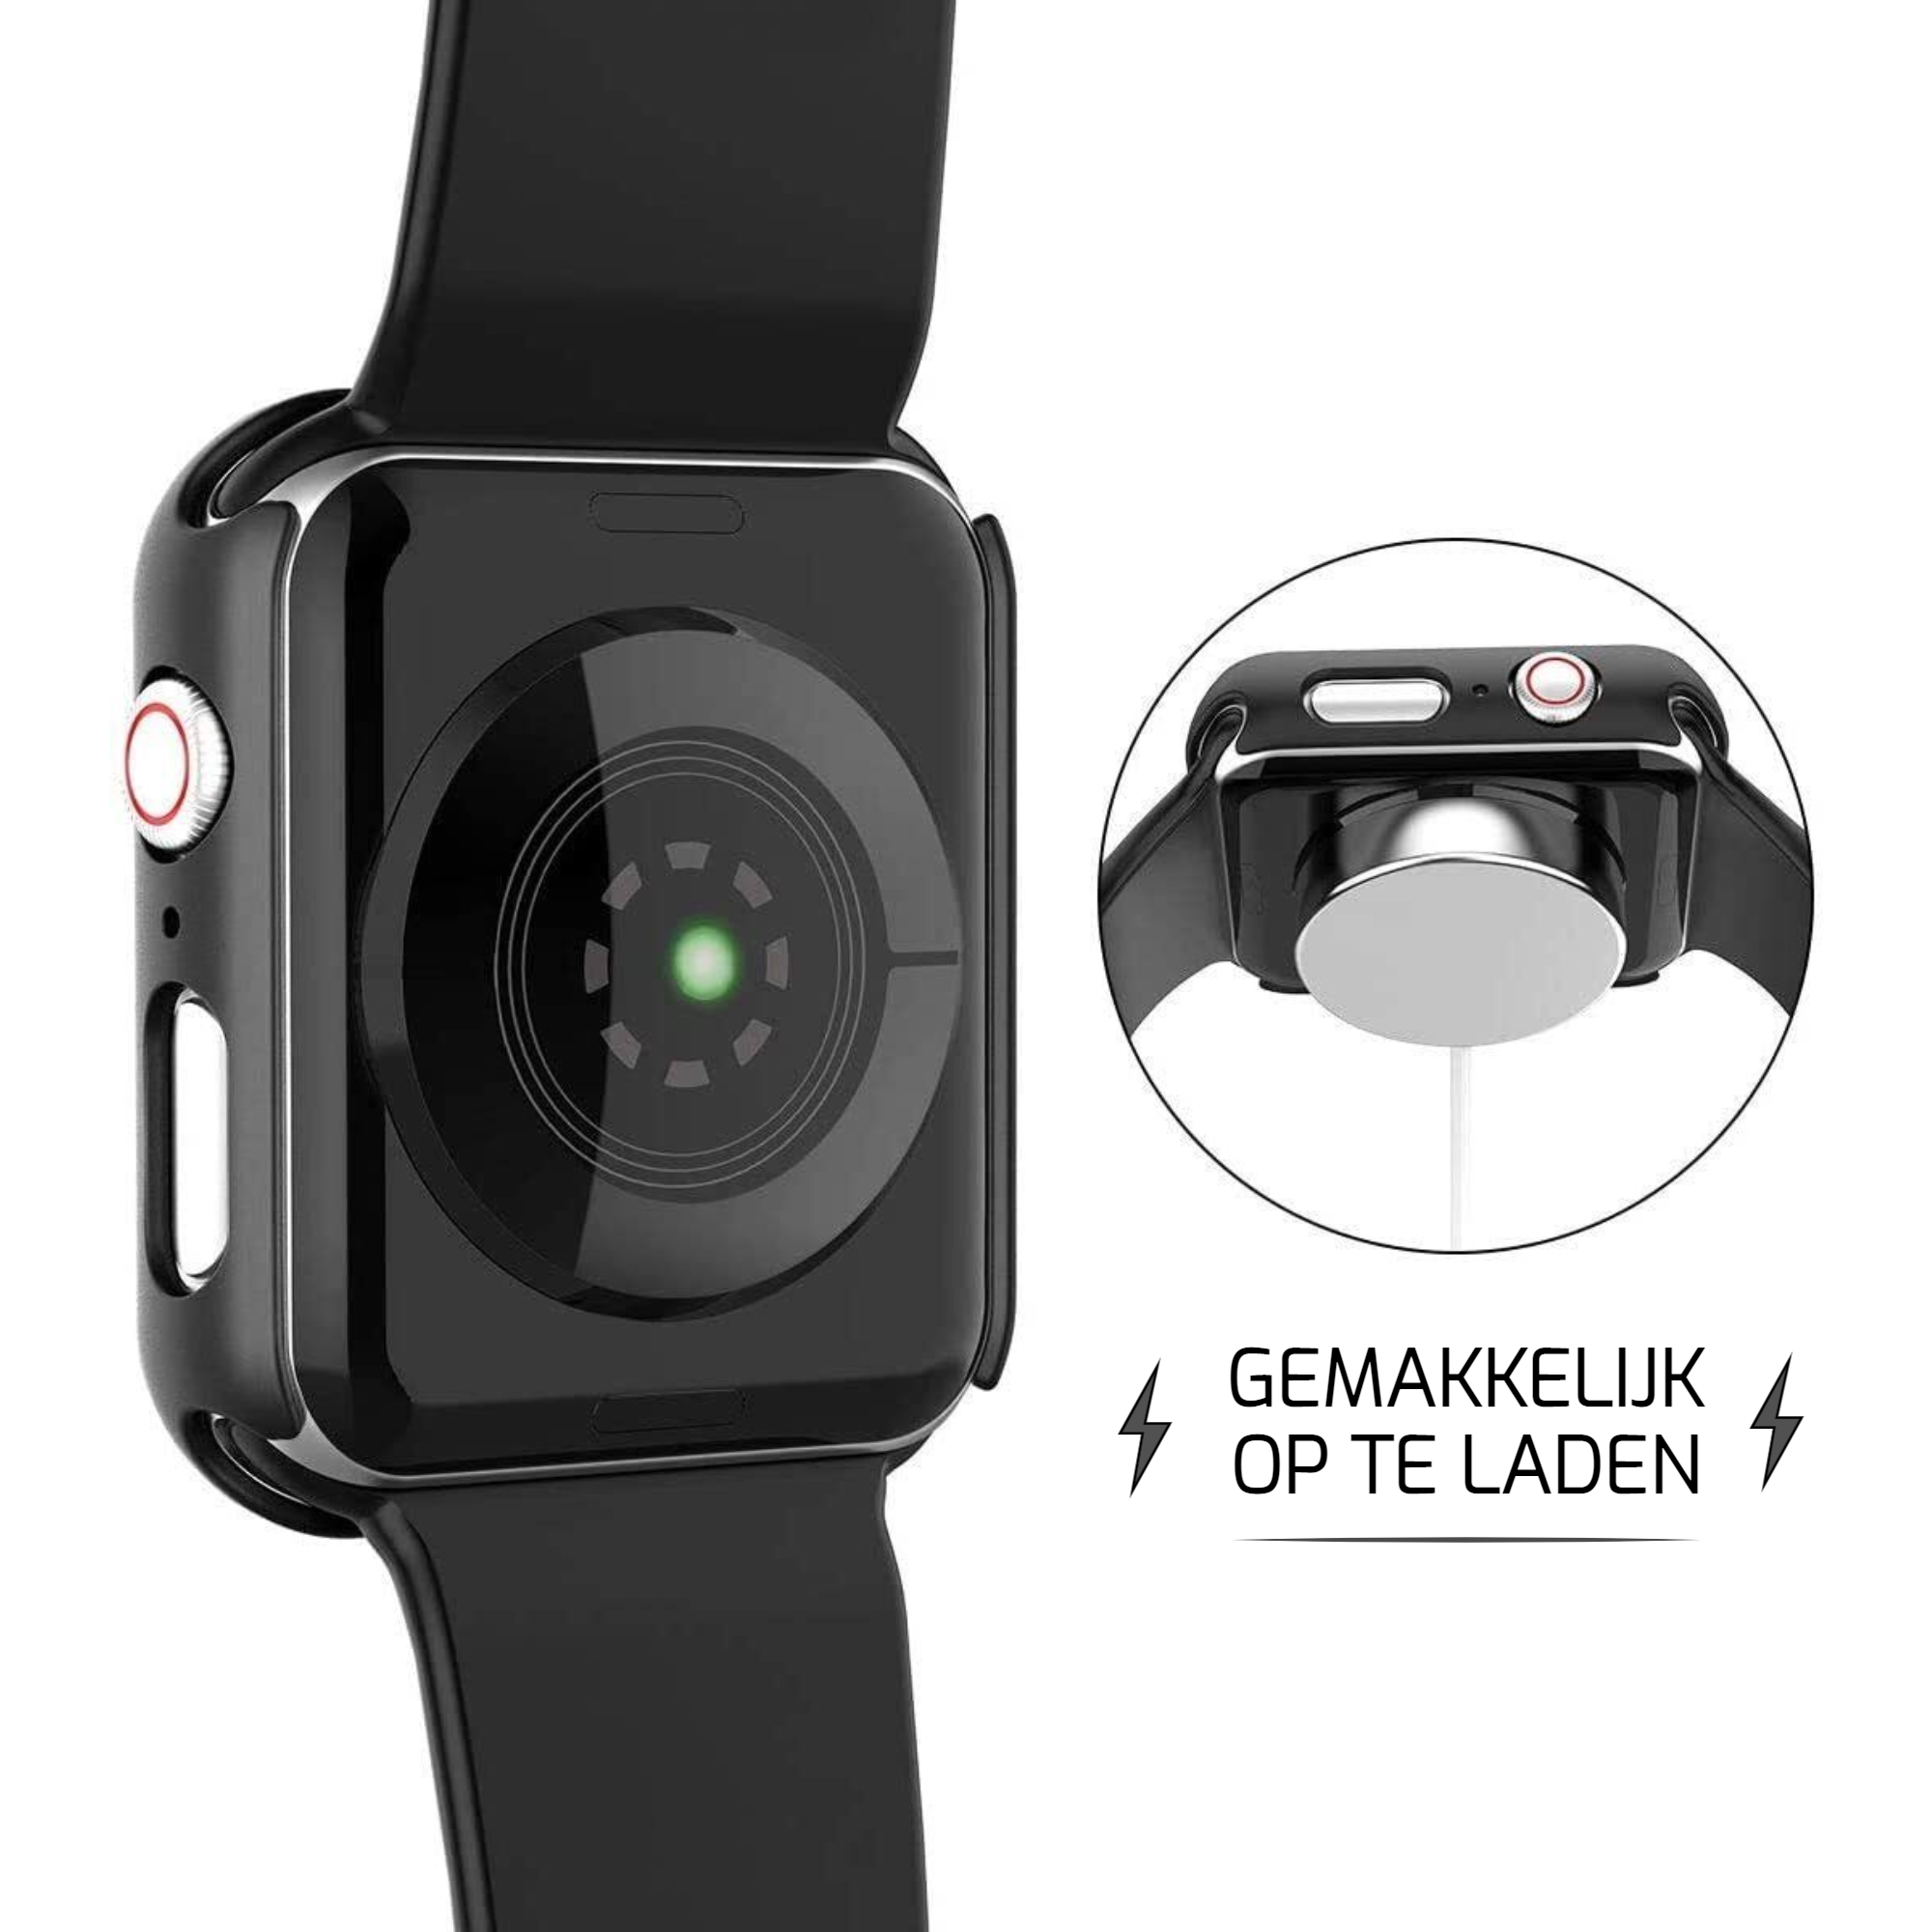 Tempered glass + beschermhoes voor Apple watch (x2)